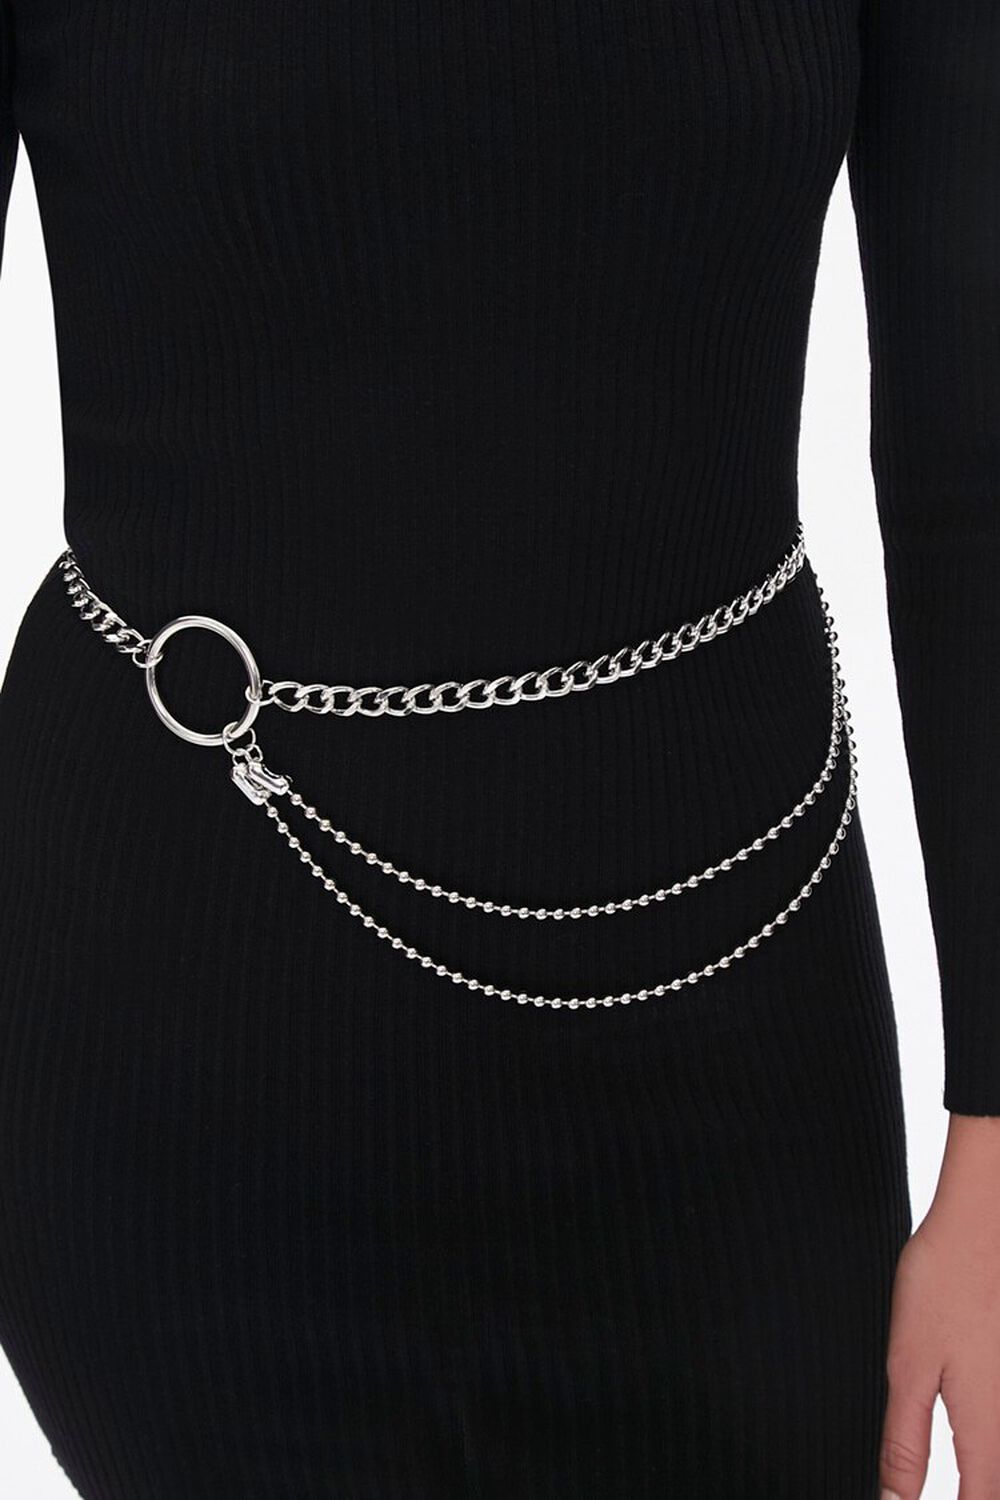 Layered Chain Hip Belt, image 1